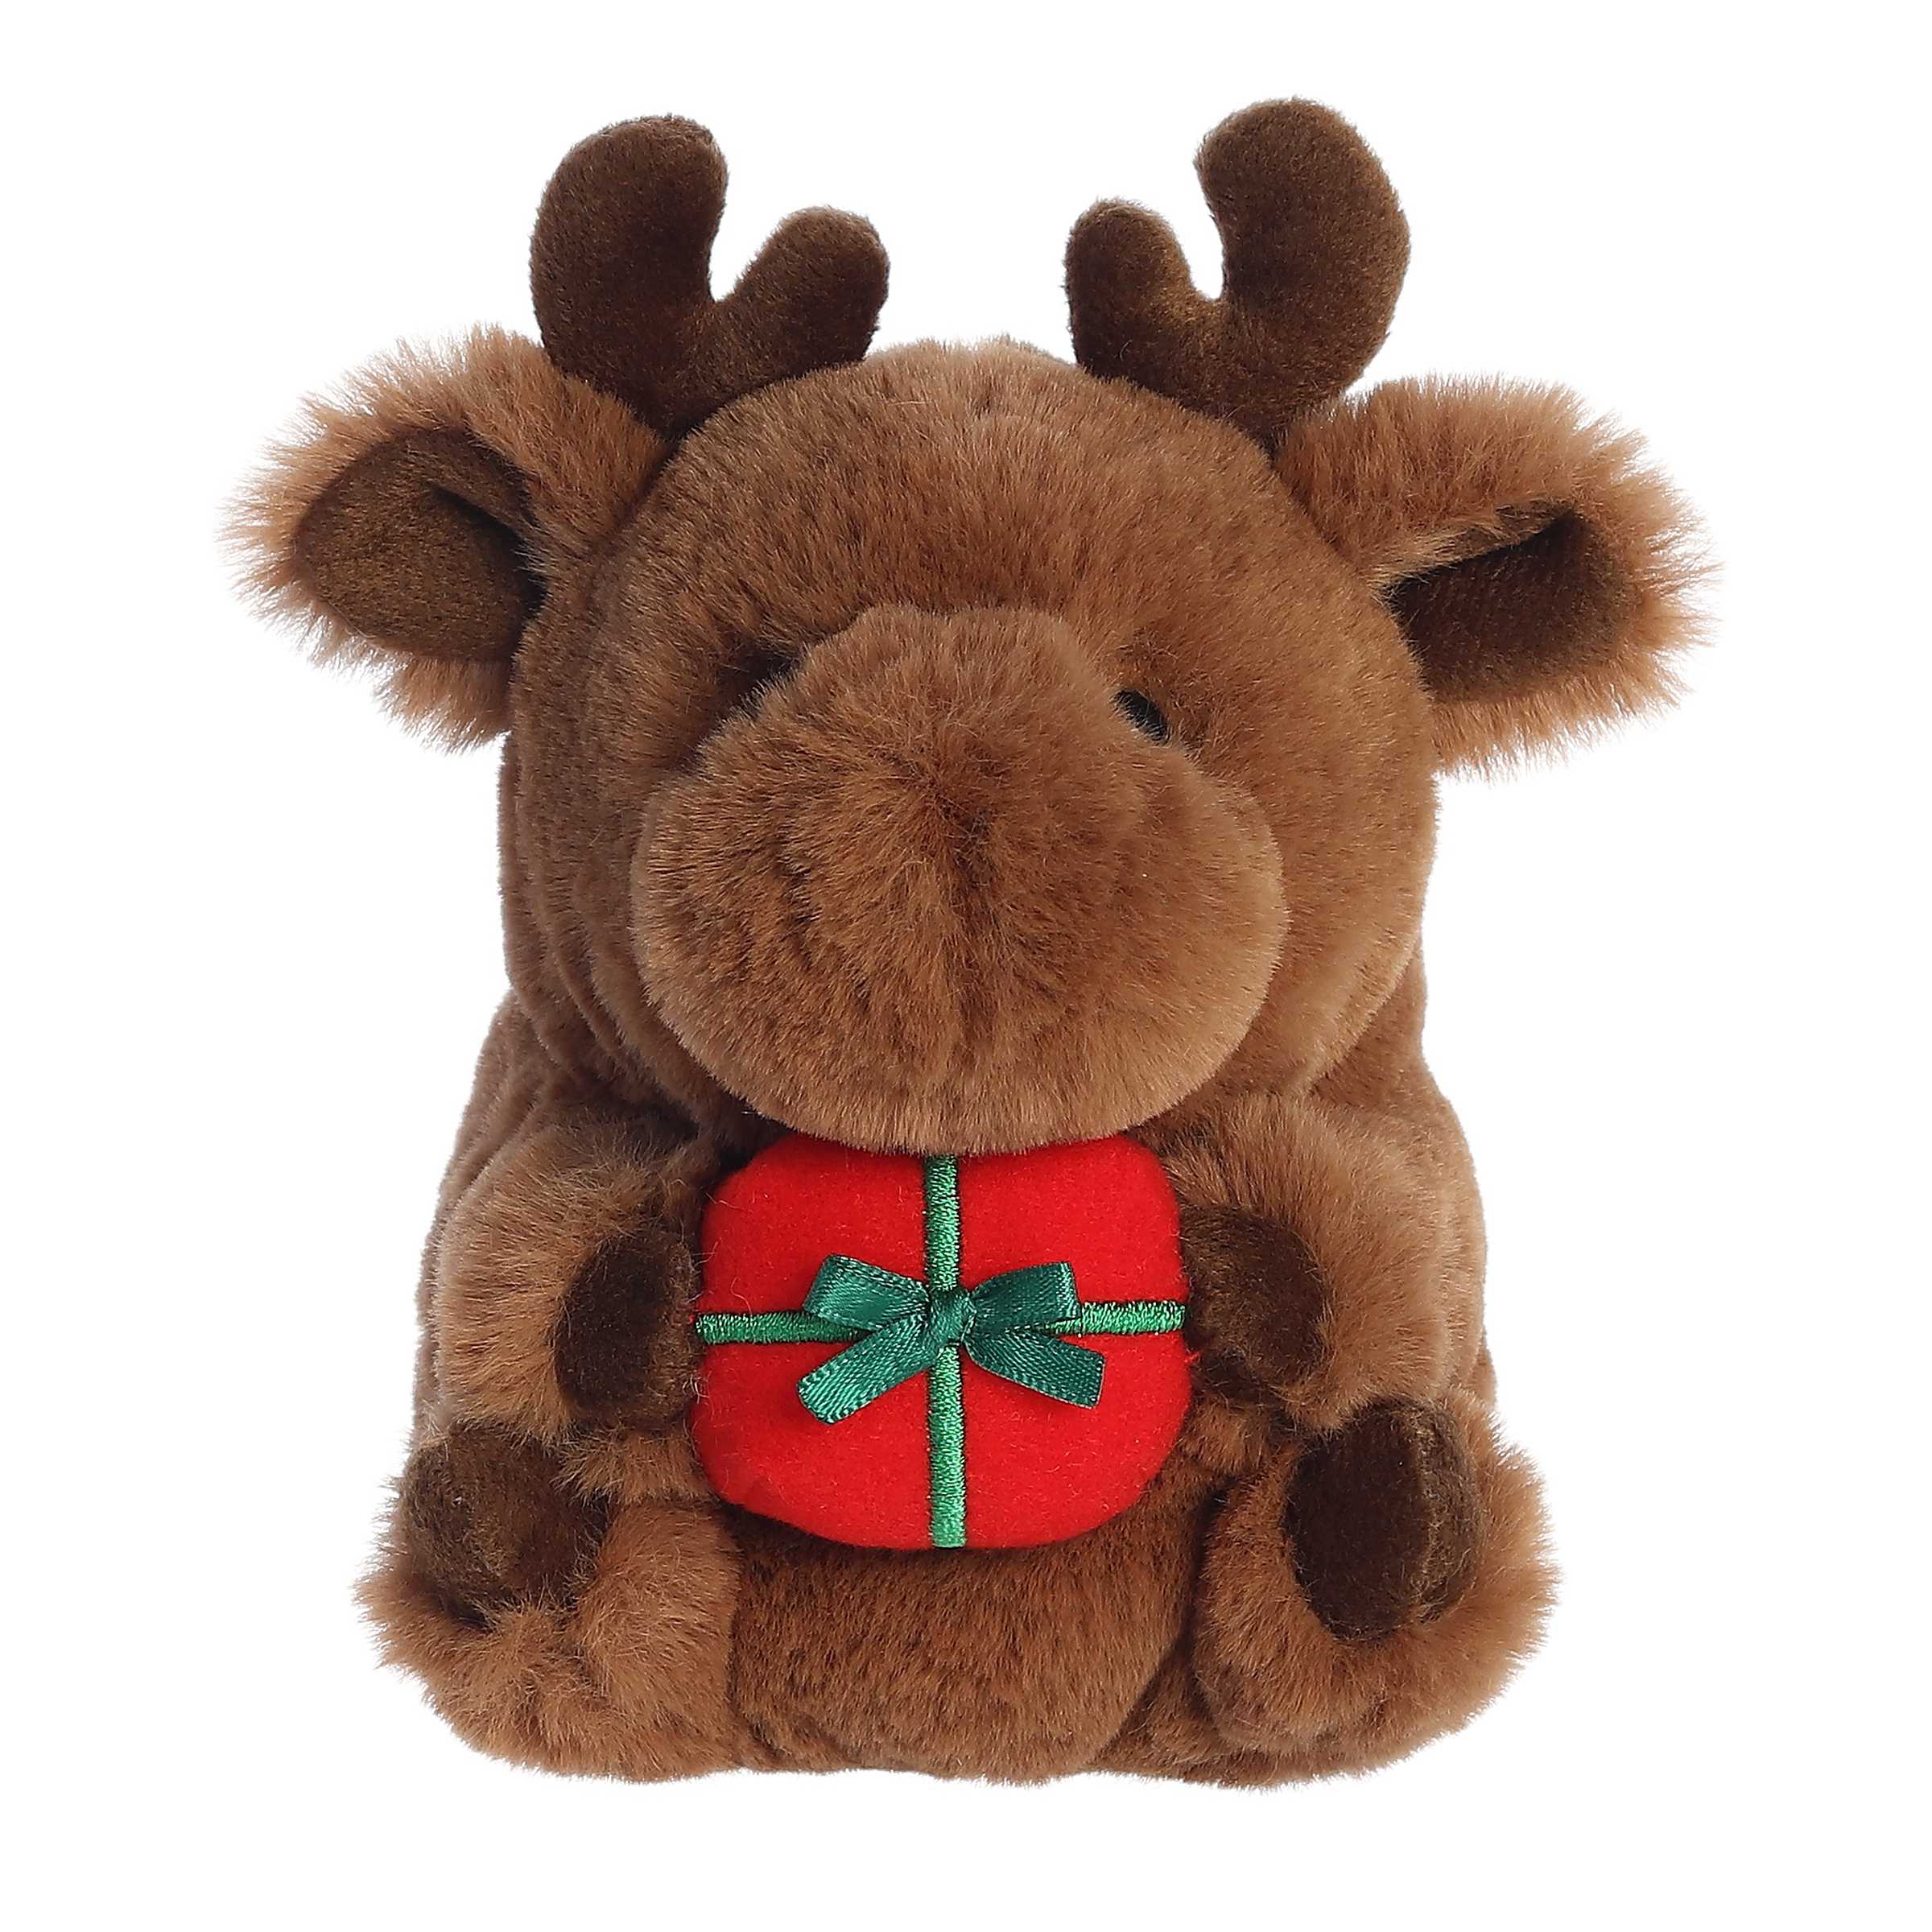 Aurora Small Brown Rolly Pet 5.5 Monty Moose Festive Stuffed Animal